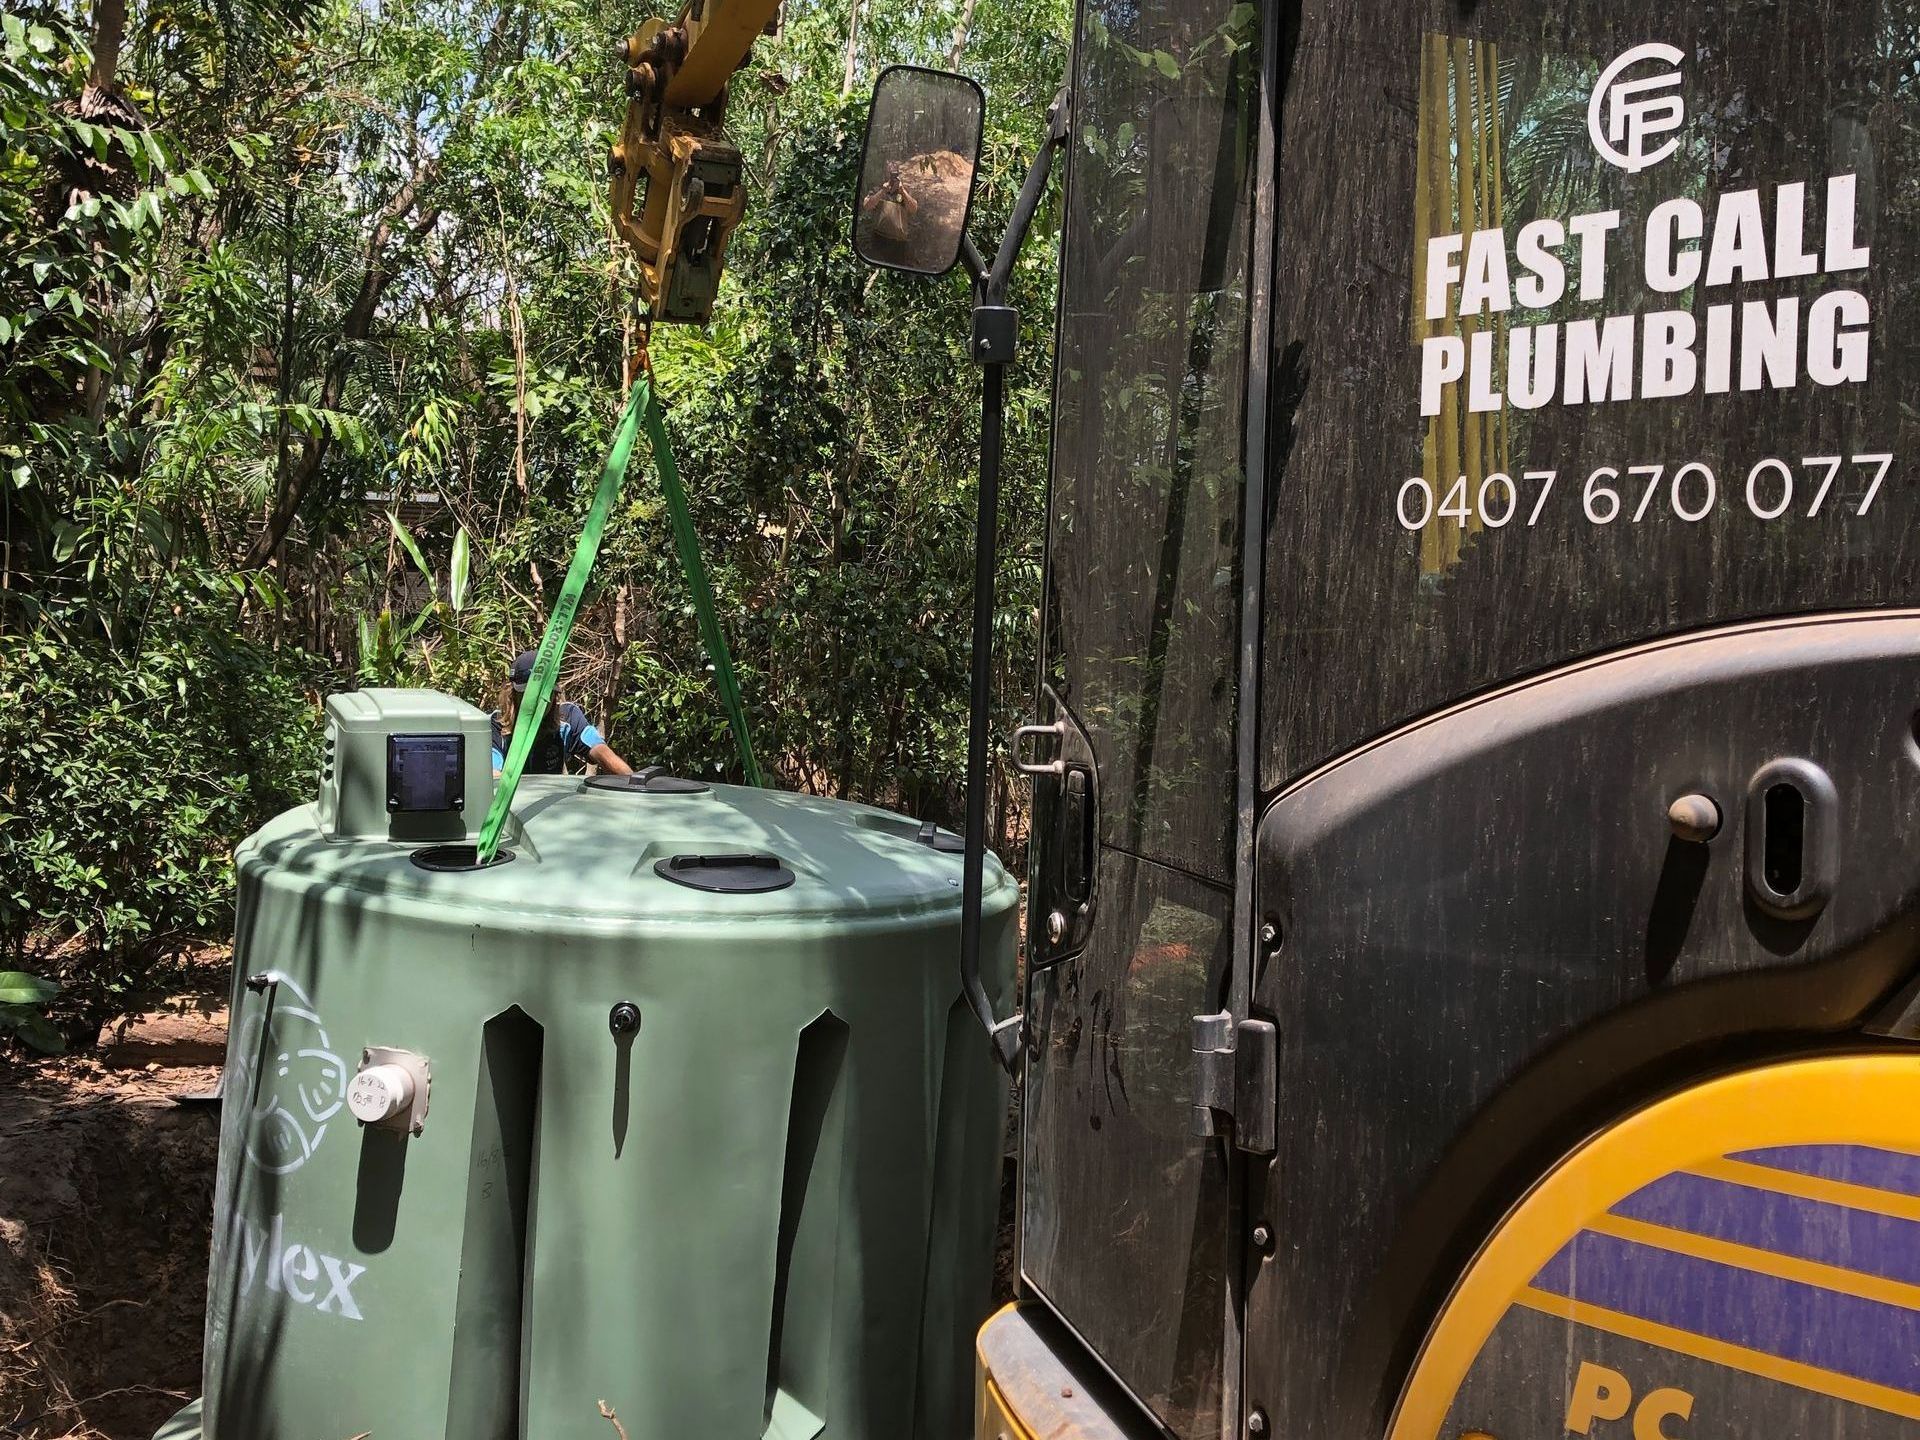 Lowering the tank by machine - Fast Call Plumbing & Pumping Darwin NT